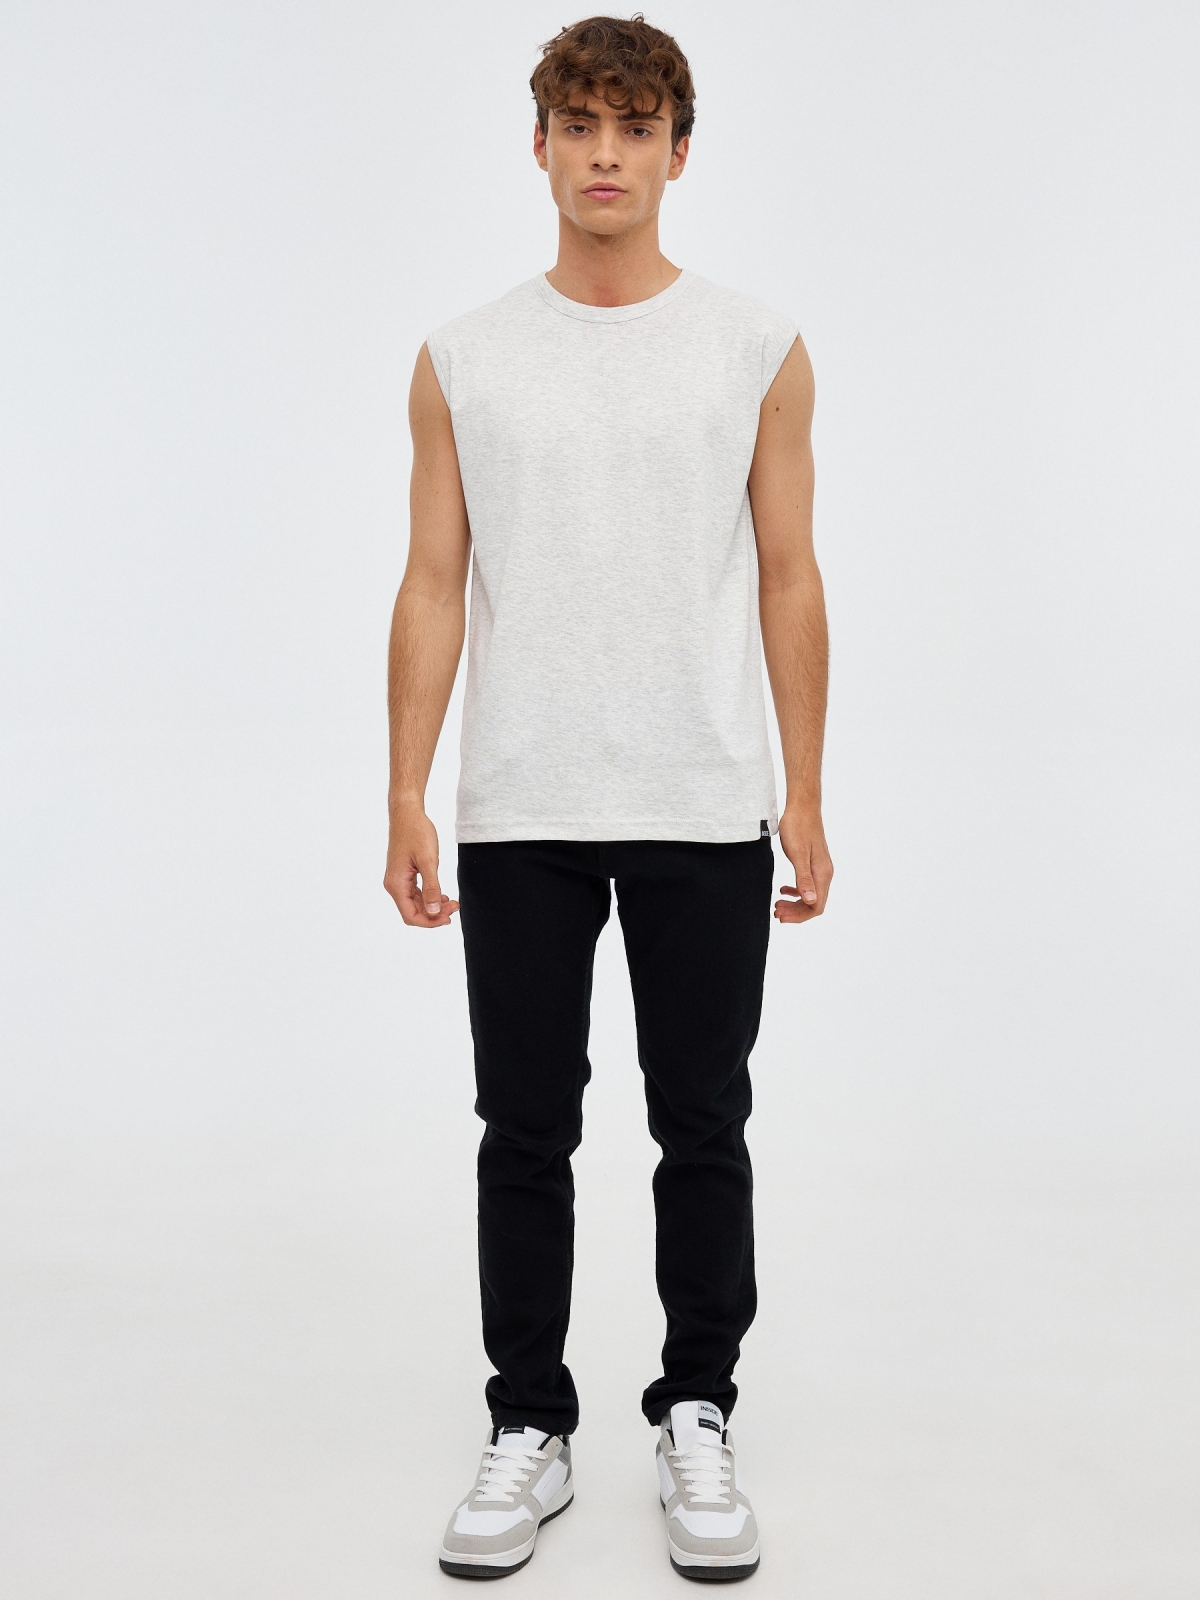 Basic sleeveless t-shirt grey front view